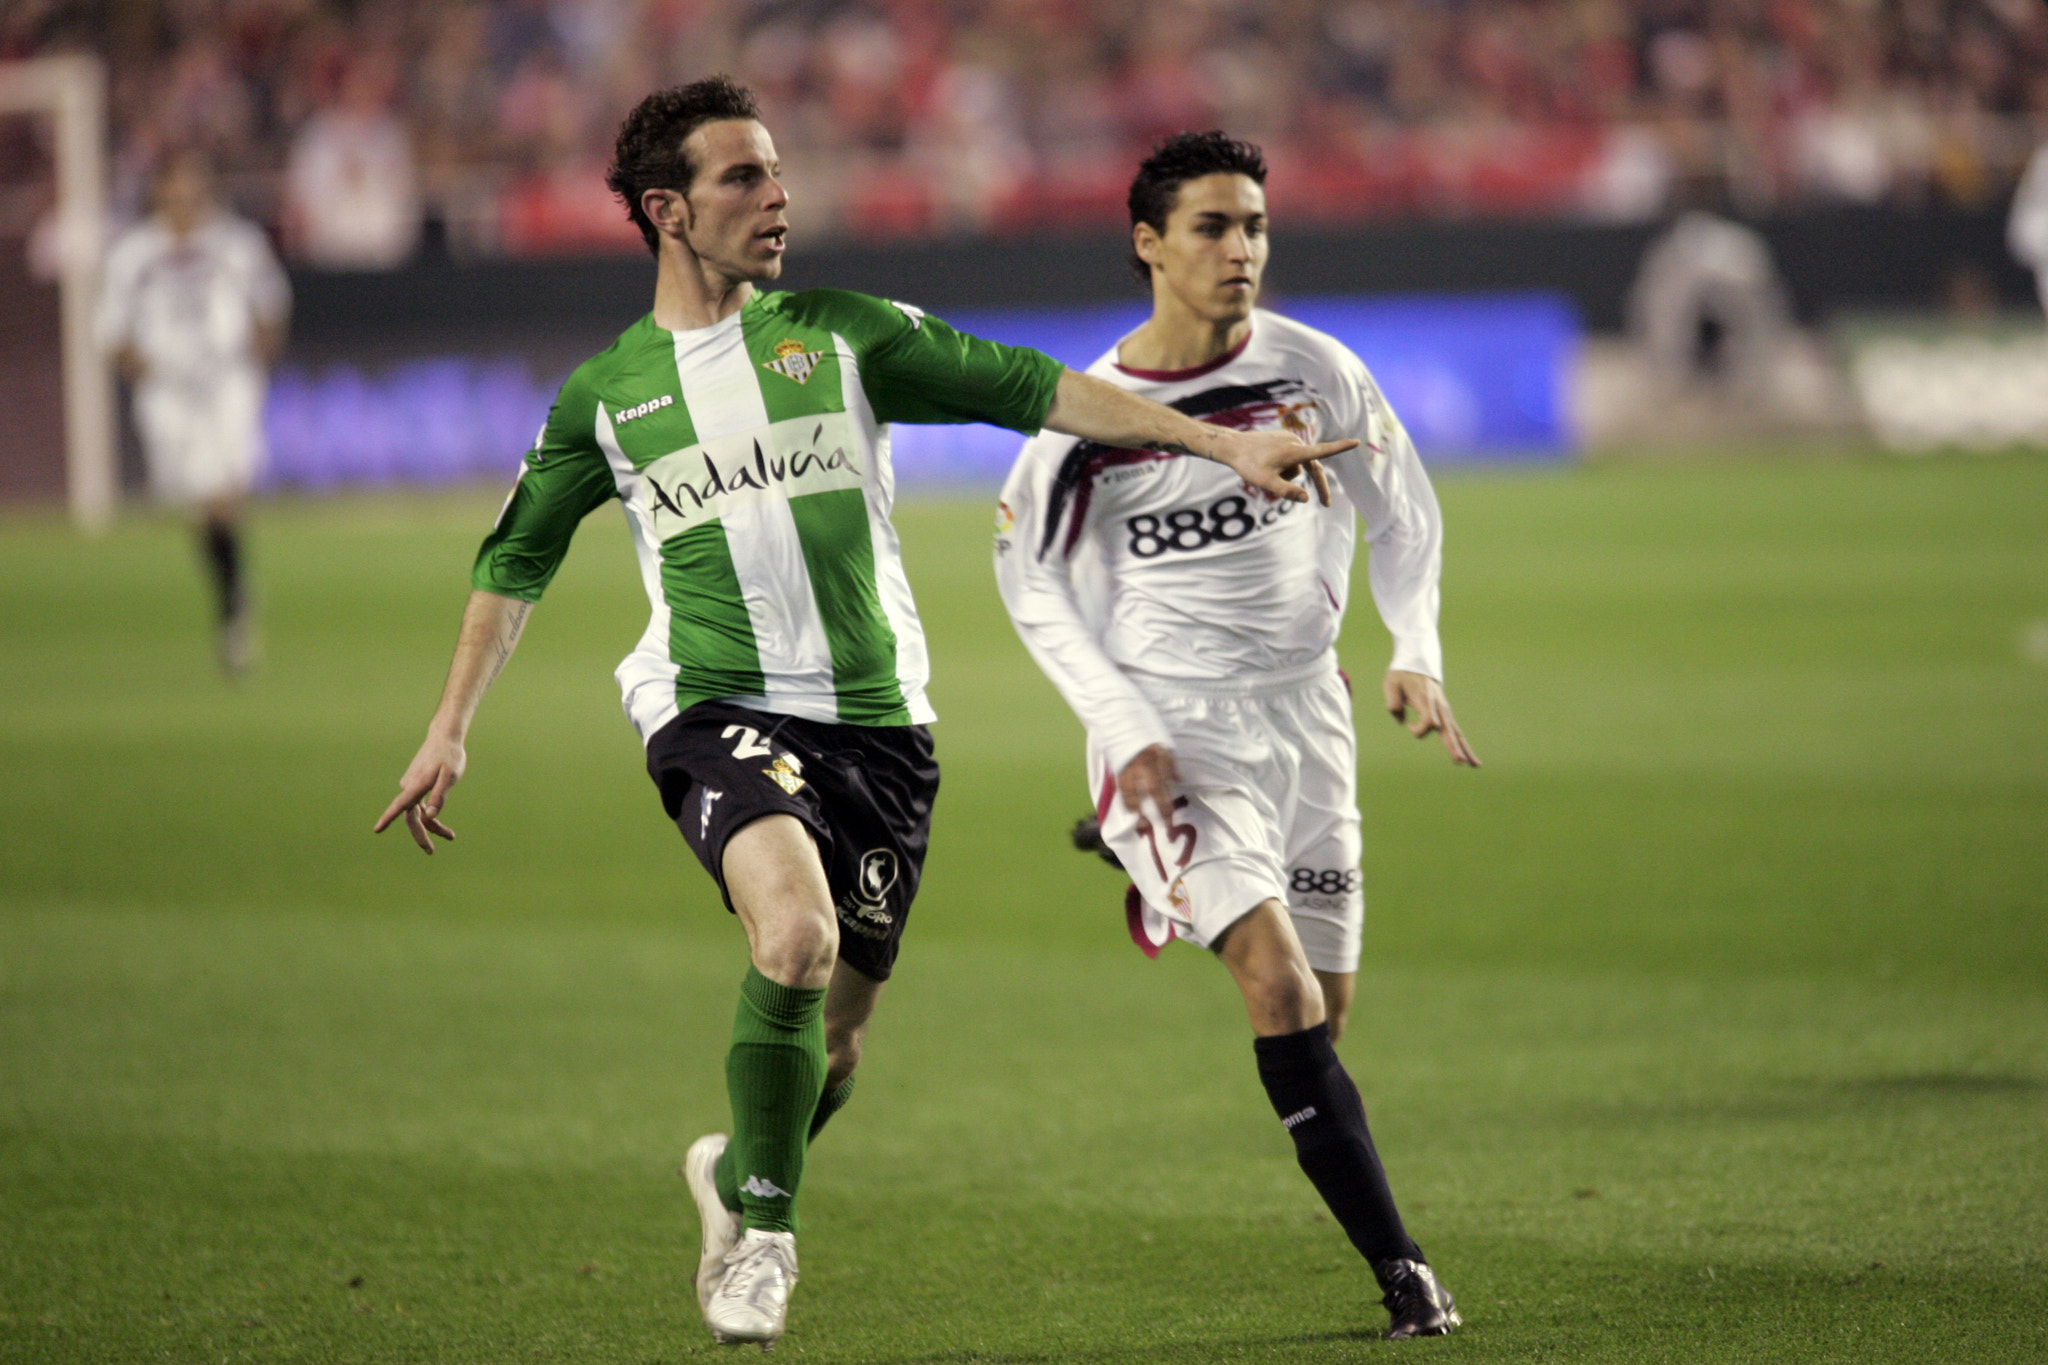 Fernando Vega and Jesus Navas. Taken at Sanchez Pizjuan stadium (Seville, Spain), on 1 February 2007